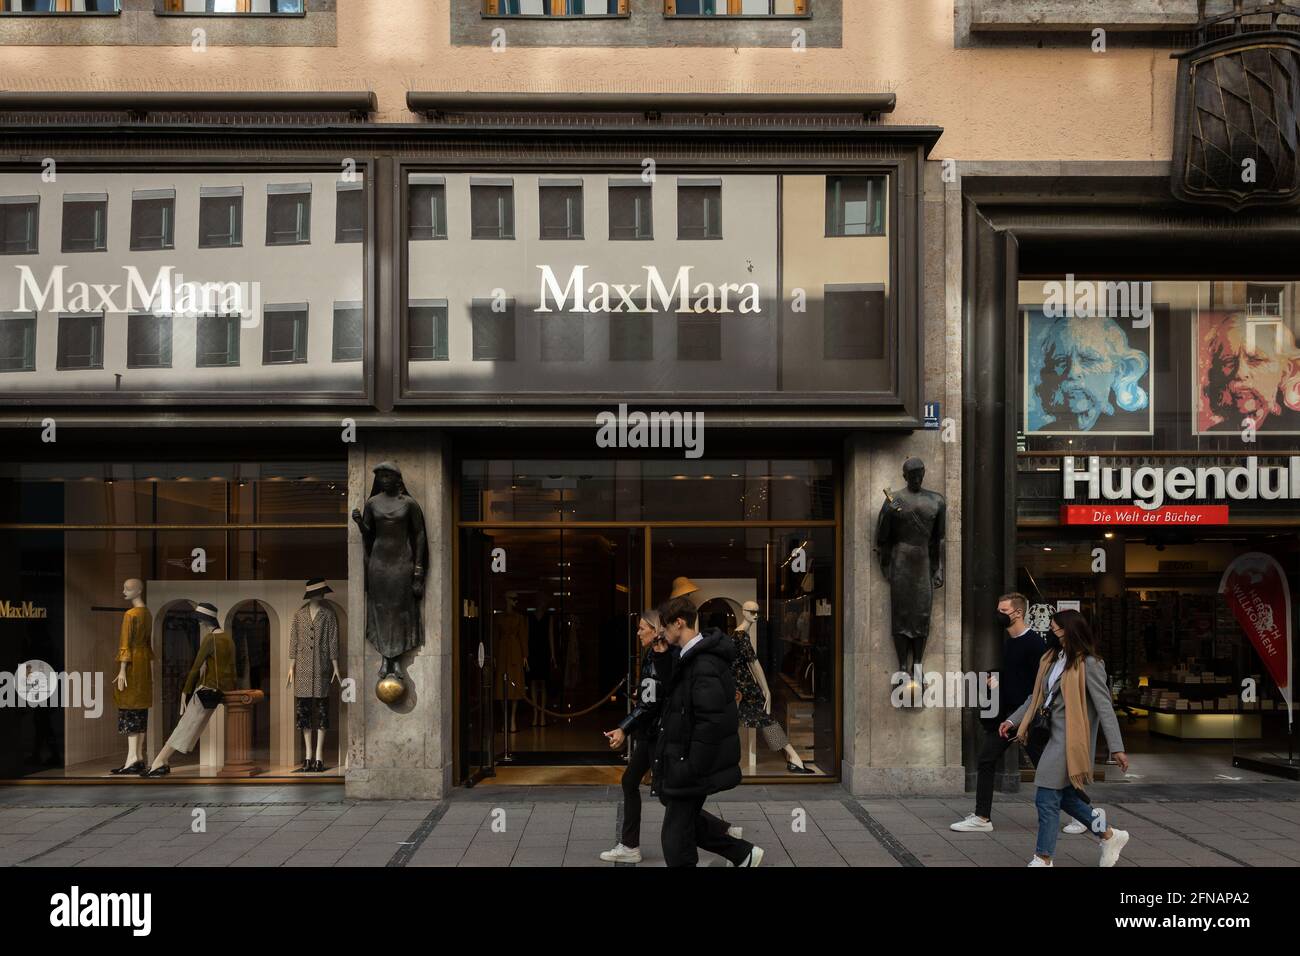 MaxMara store sign in Munich town center Stock Photo - Alamy